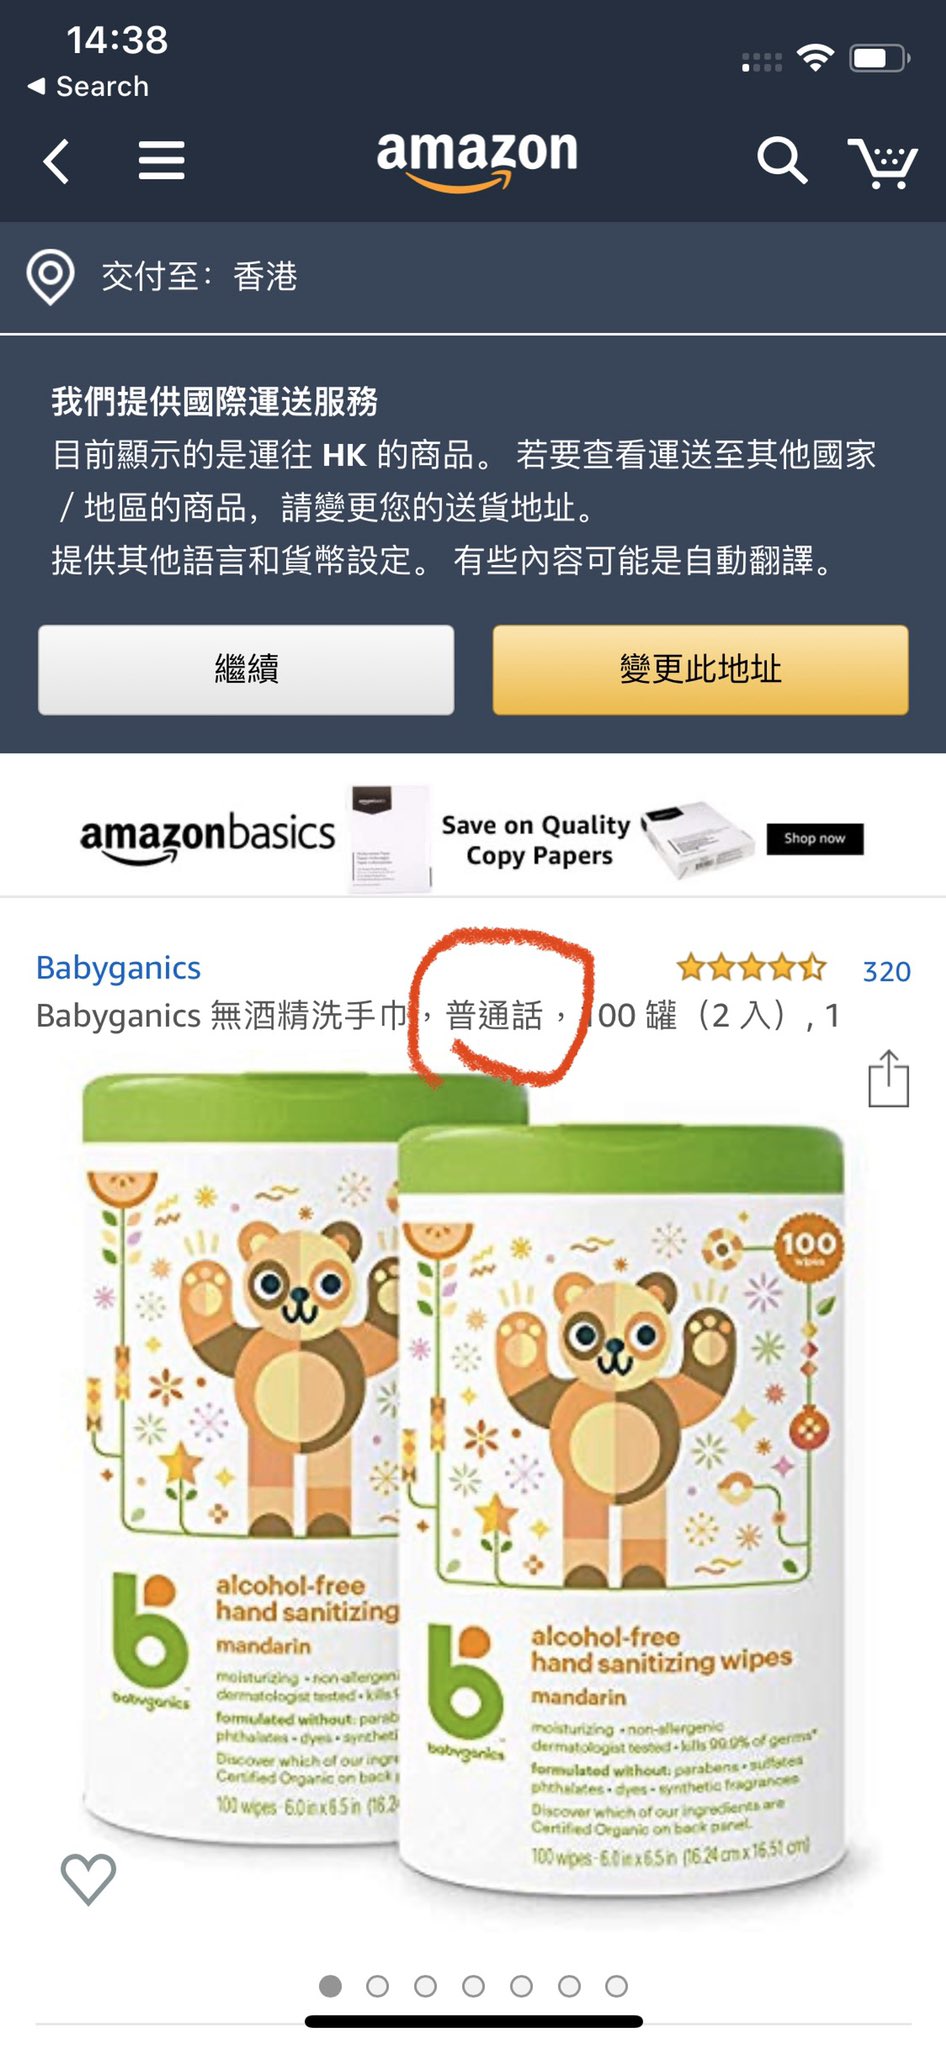 Jian Alan Huang Rt Mianmaoku 老公老公 咦 啥意思 这罐bb纸巾为什么是普通话的 是哦 我明白了 它的意思是mandarin 橙味的 啊啊啊啊 Amazon翻译可以去跳海了 T Co 4fujxy9ecu Twitter